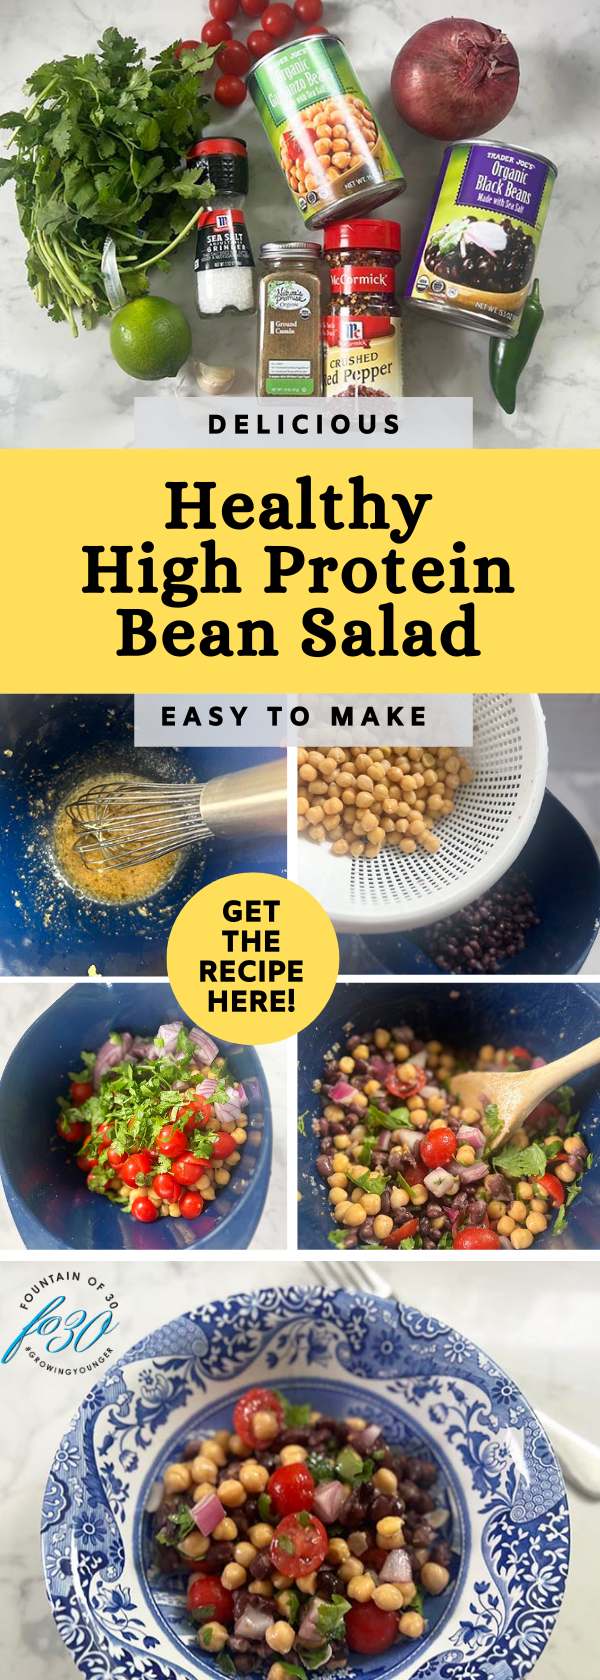 delicious healthy high protein bean salad fountainof30